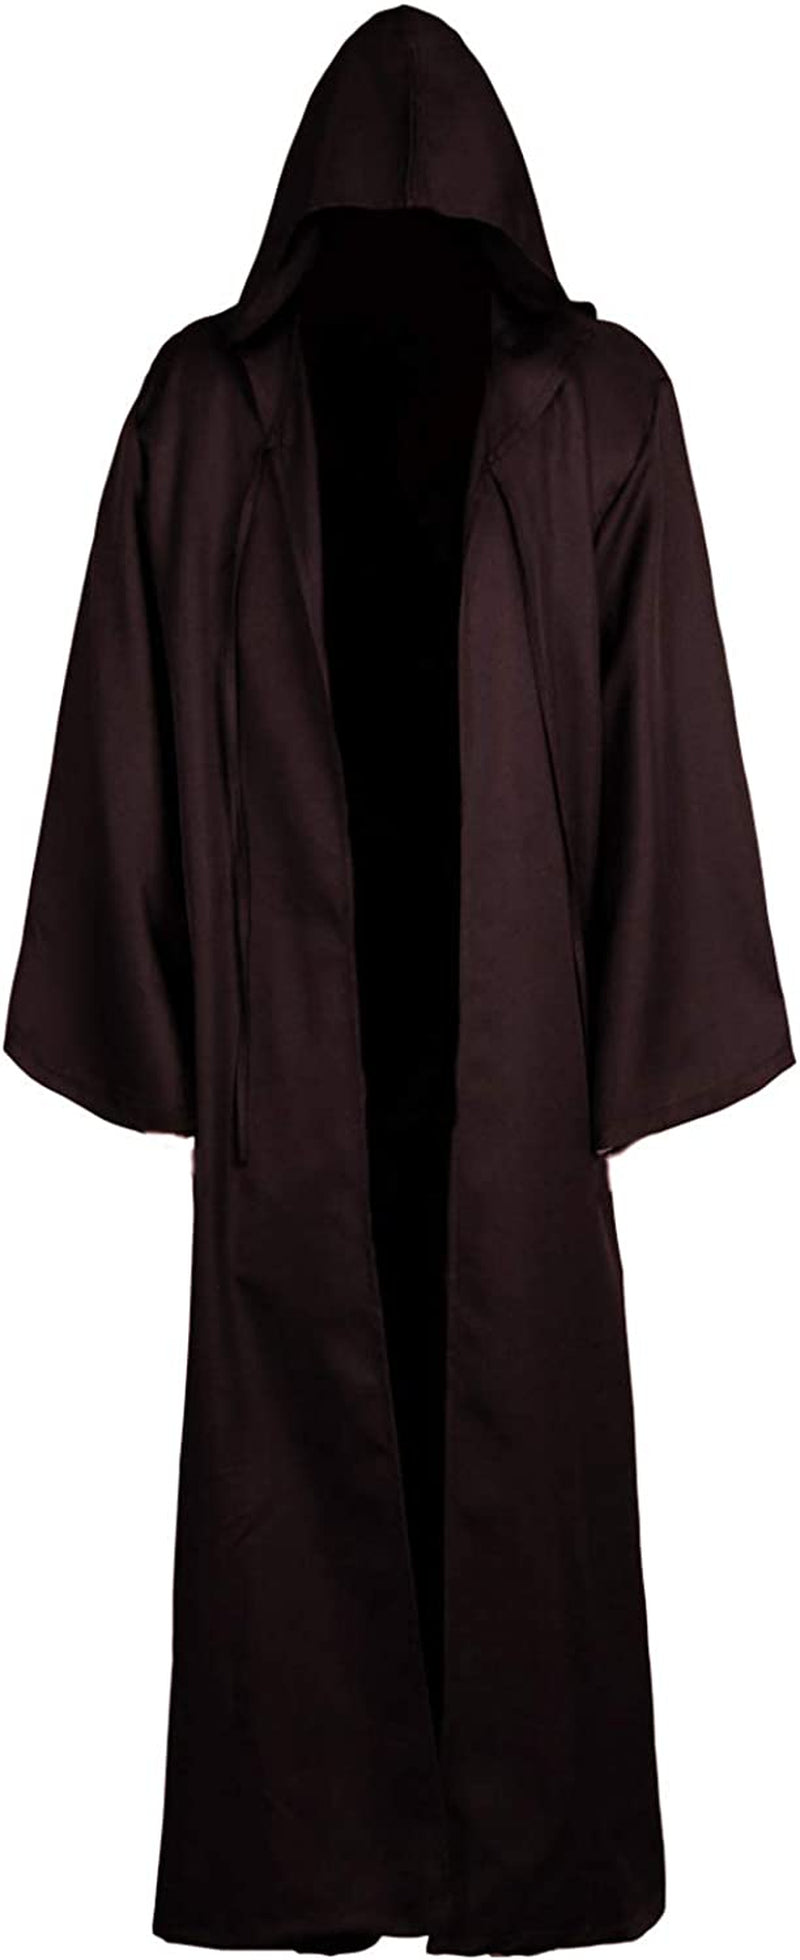 JOYSHOP Men & Kids Tunic Hooded Robe Halloween Cosplay Costume Robe Cloak Cape  JOYSHOP Brown 4X-Large 